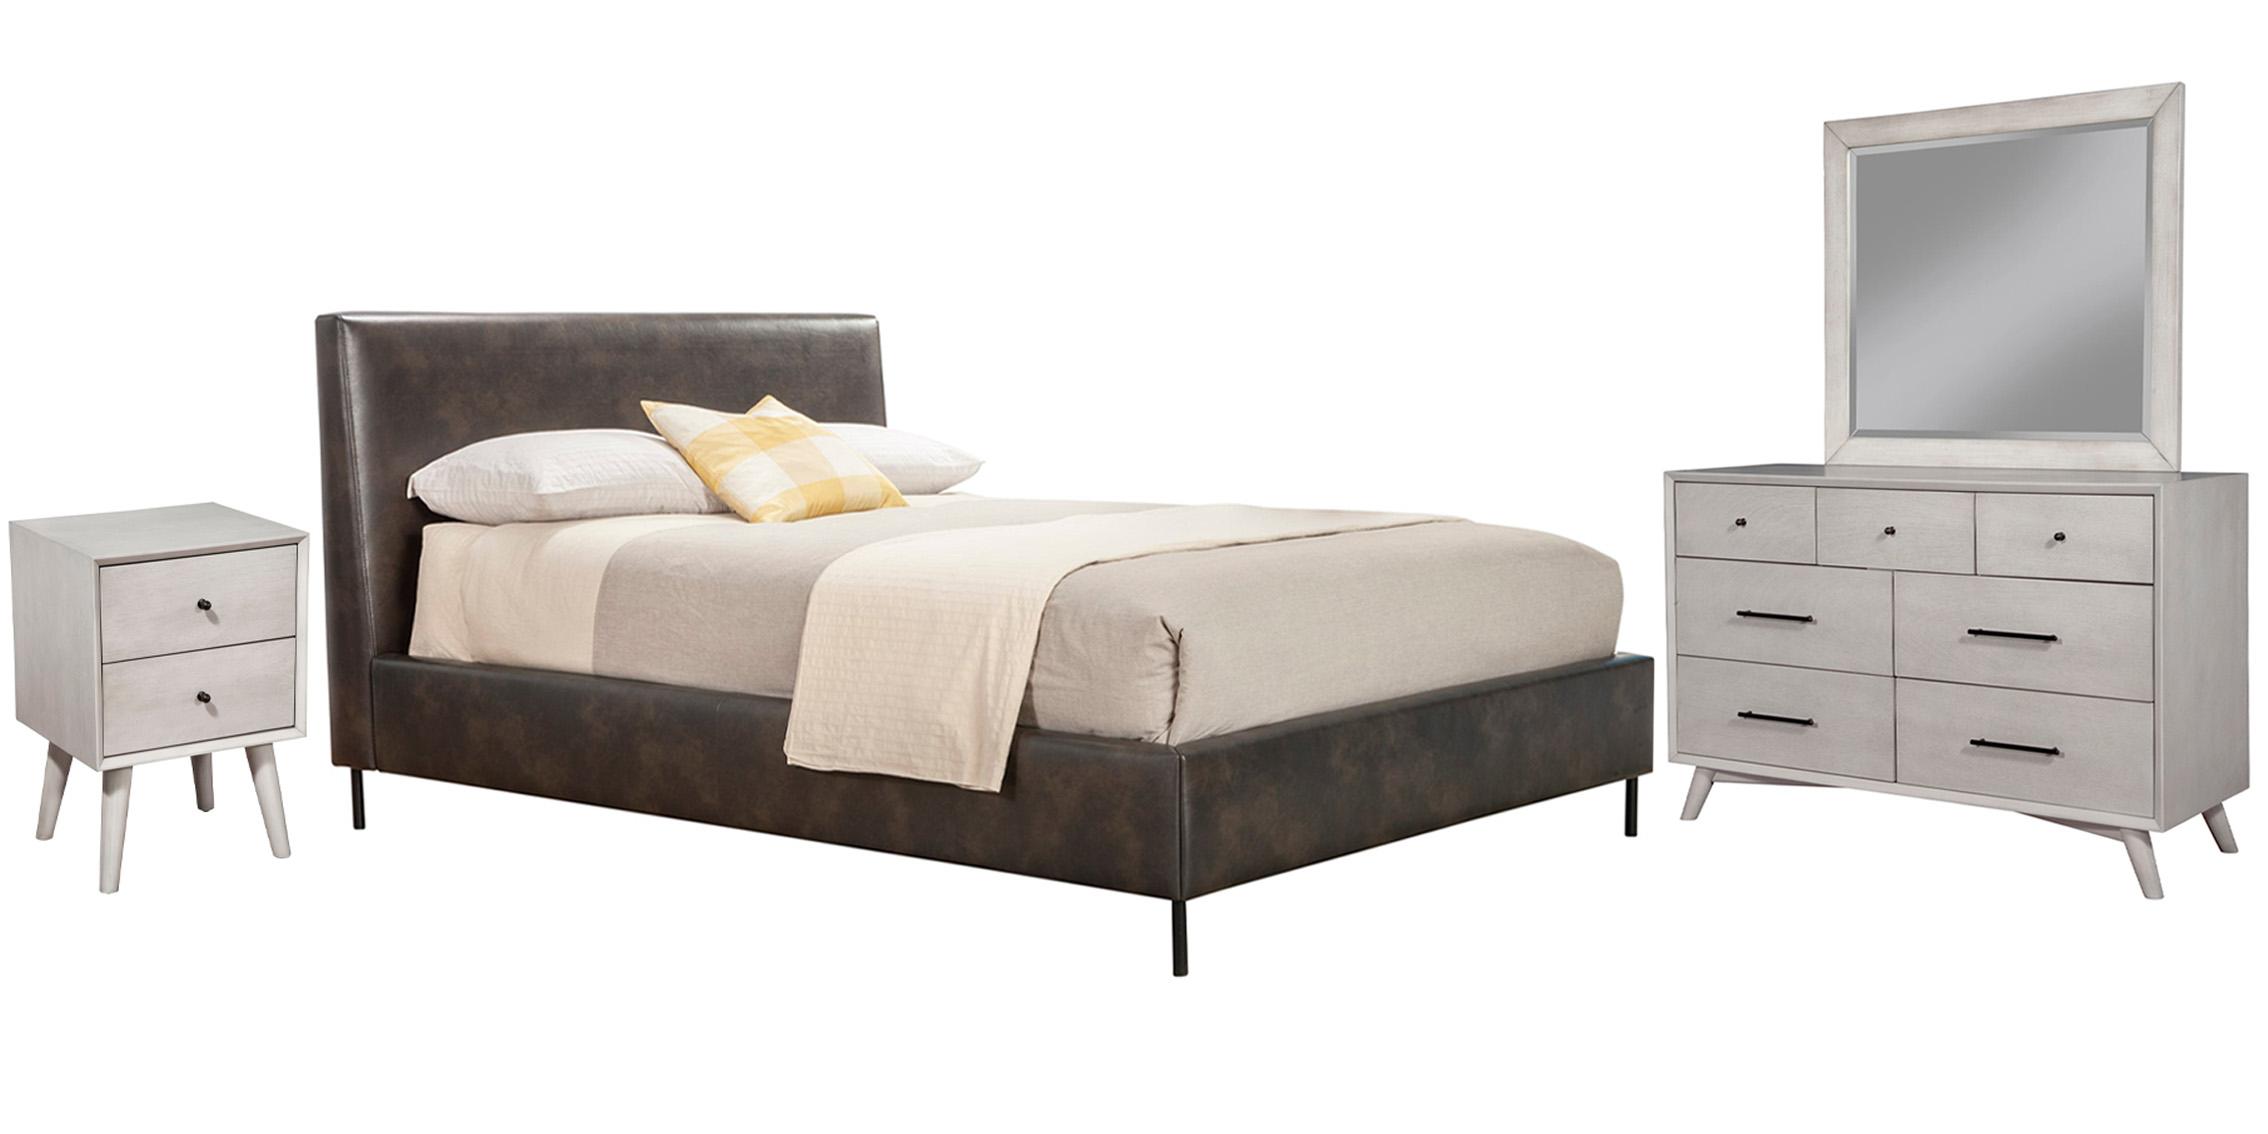 Modern Platform Bedroom Set SOPHIA / FLYNN 6902Q-GRY-Set-4 in Gray Faux Leather